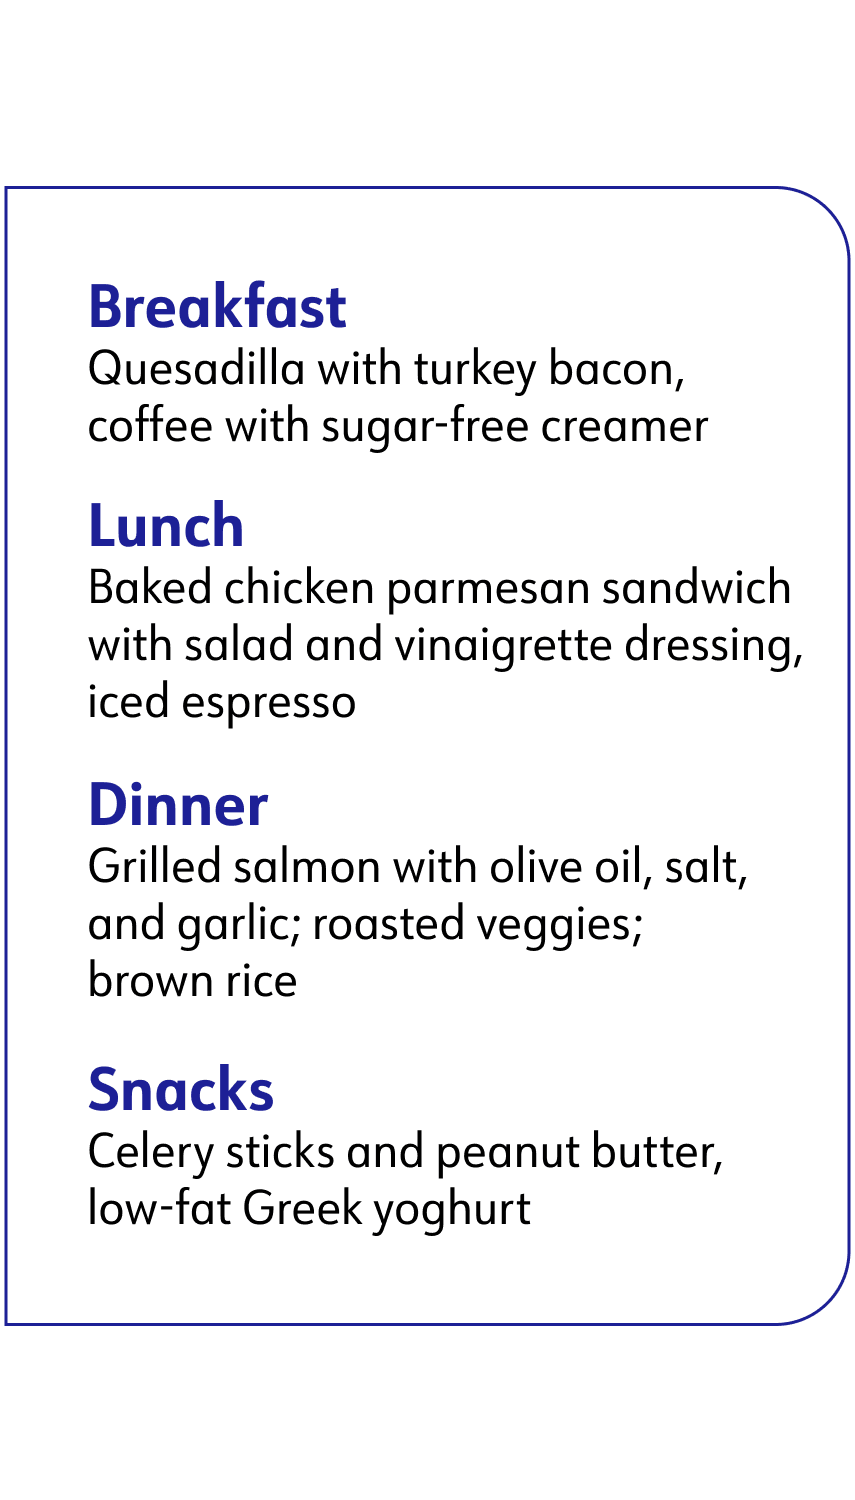 breakfast: quesadilla, lunch: baked chicken parmesan sandwich, Dinner: grilled salmon, Snacks: celery sticks and peanut butter and greek yogurt